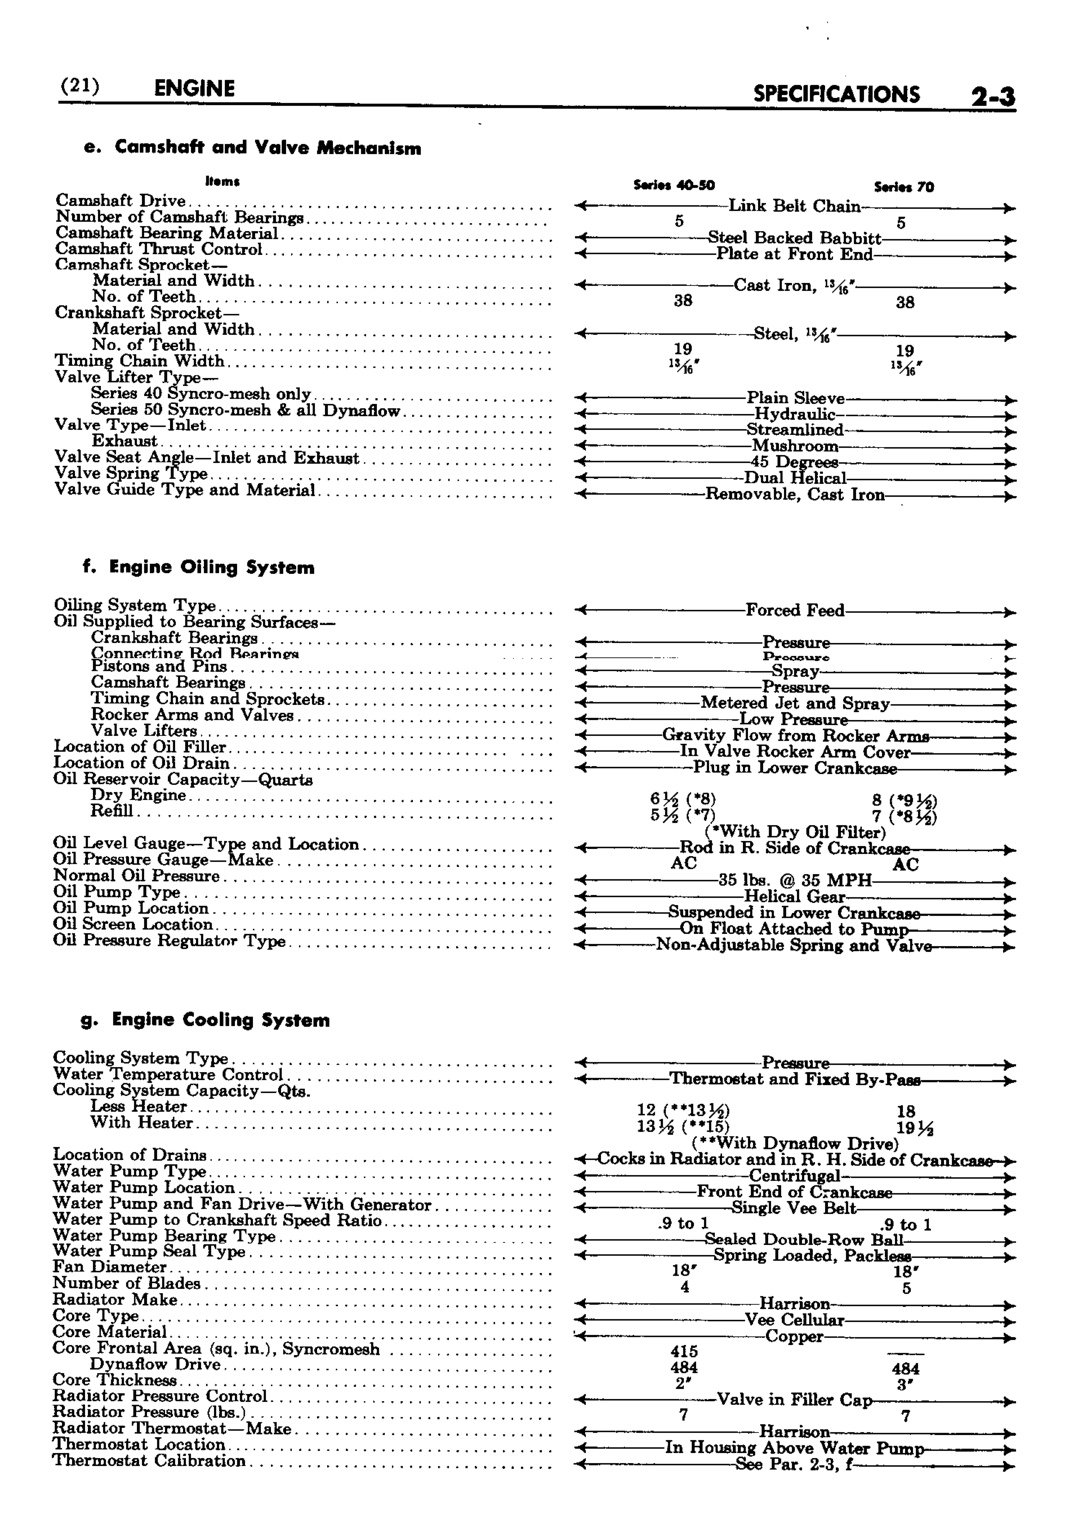 n_03 1952 Buick Shop Manual - Engine-003-003.jpg